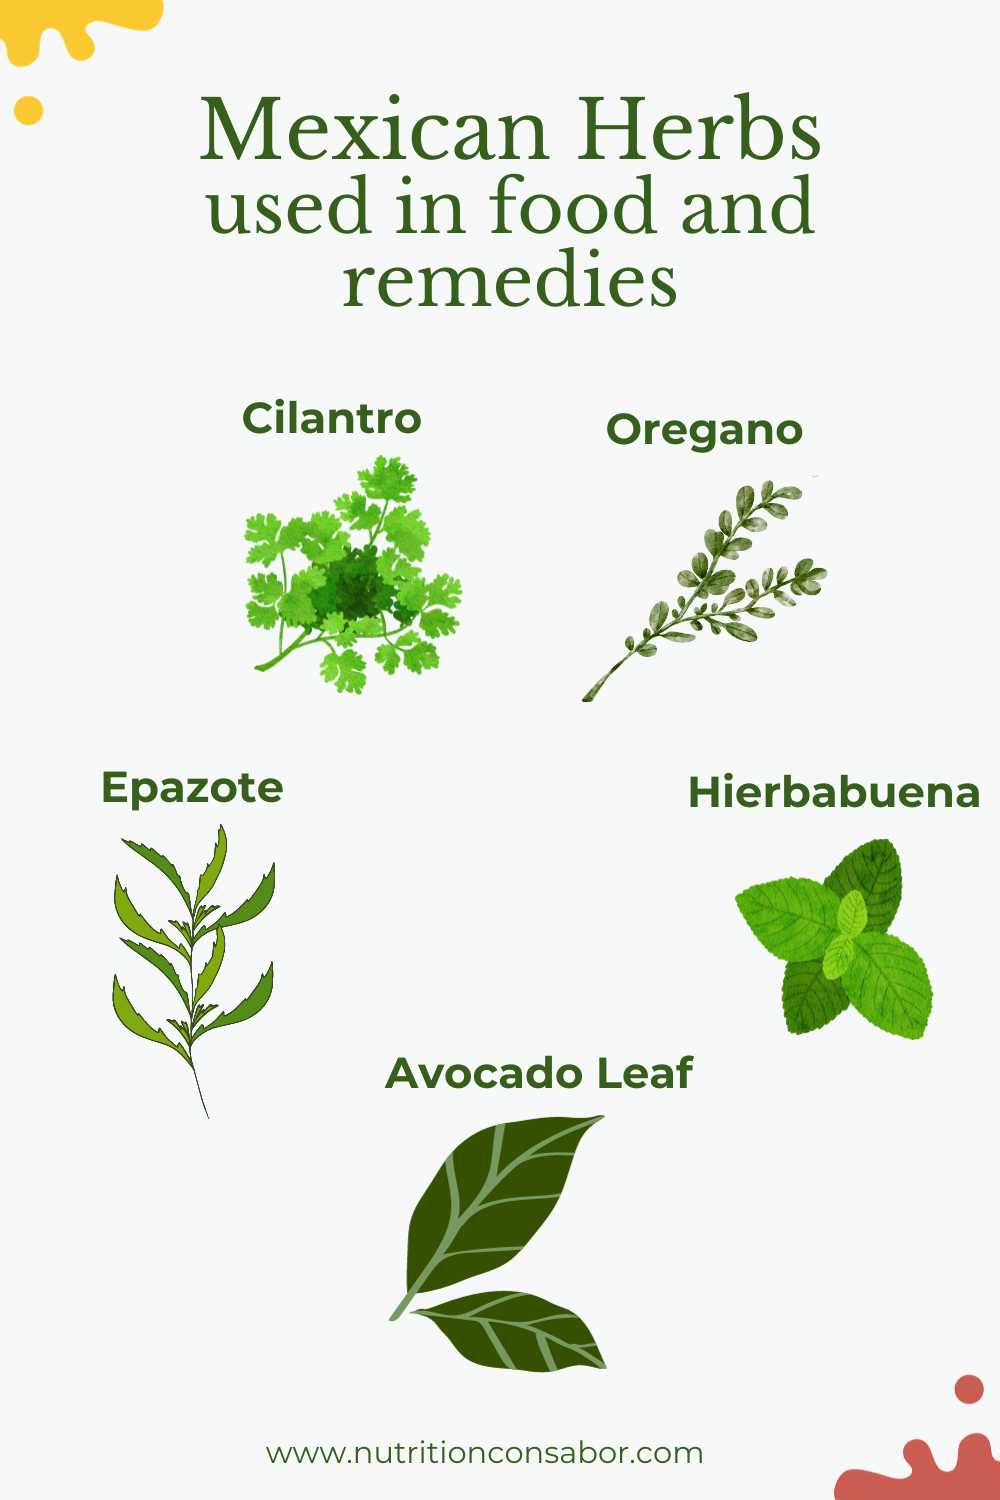 illustrations of common mexican herbs including epazote, oregano, cilantro, and avocado leaf.